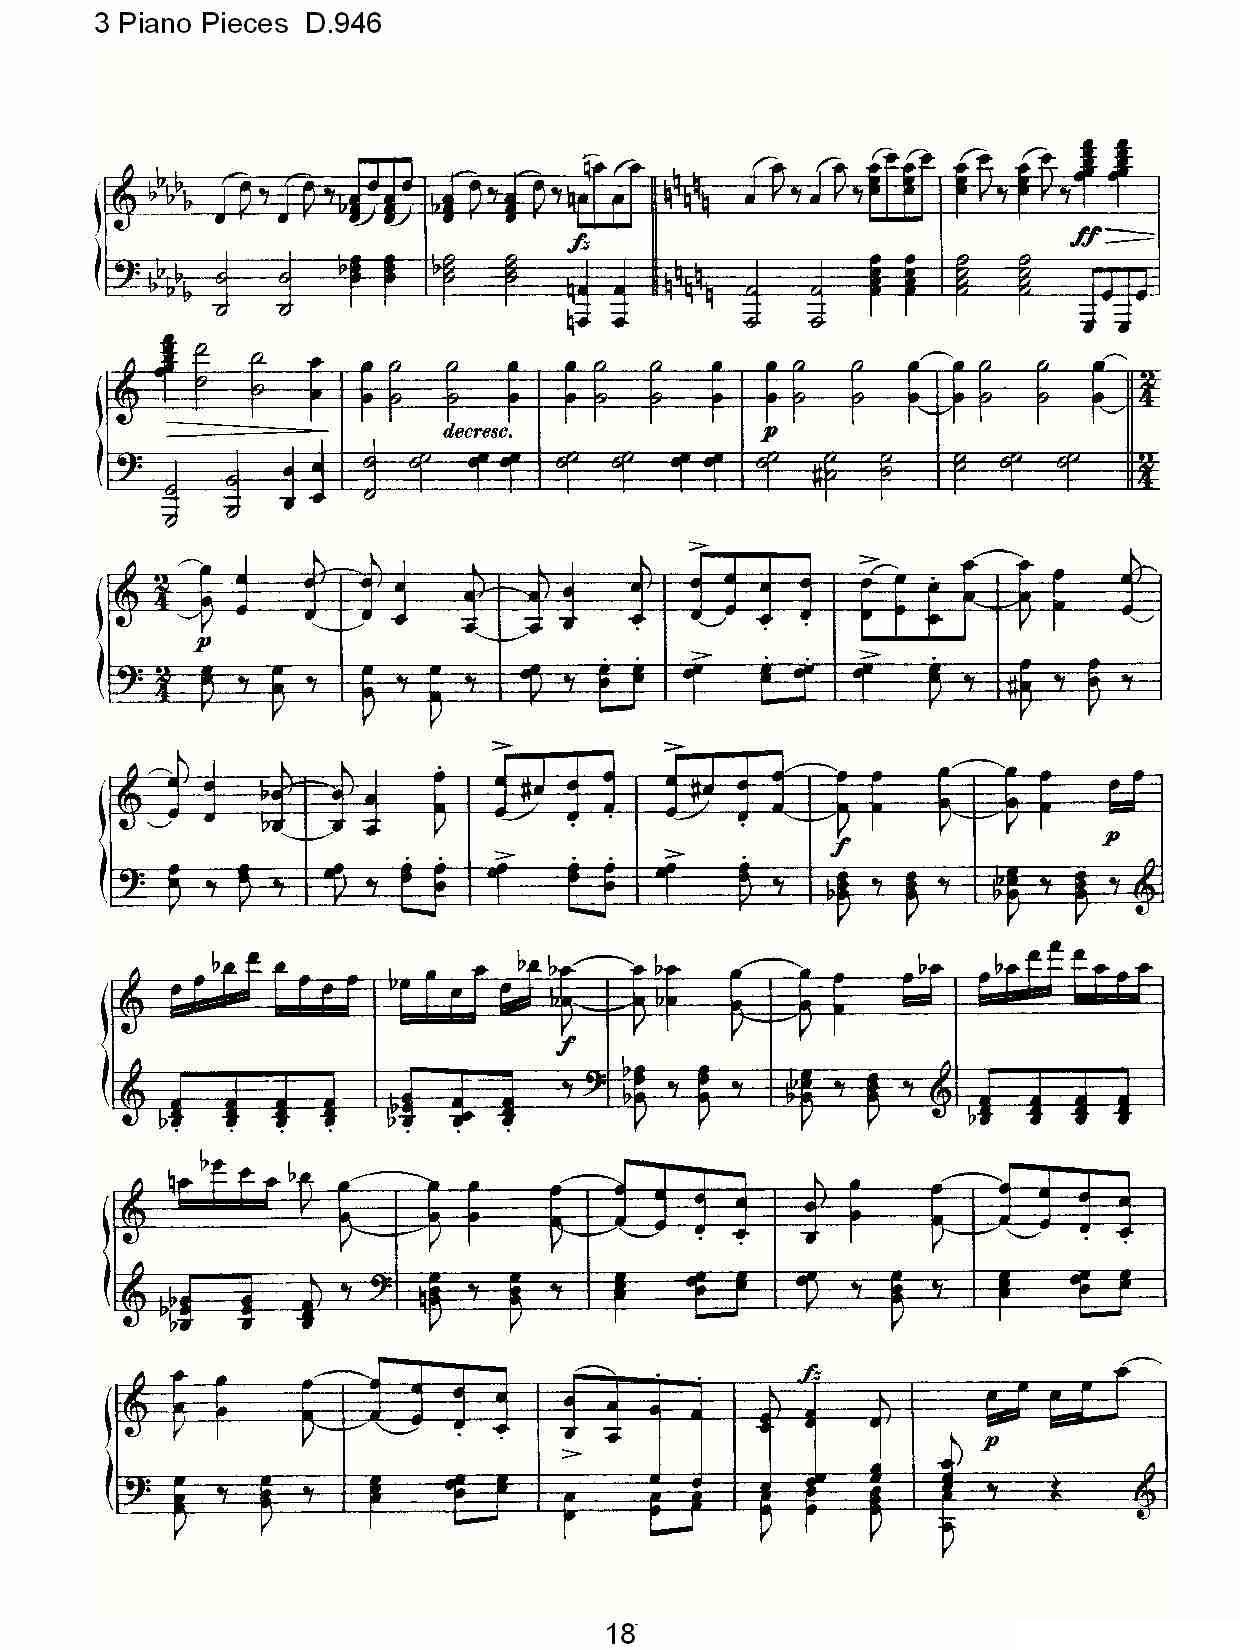 3 Piano Pieces D.946（钢琴三联奏D.946）钢琴曲谱（图18）